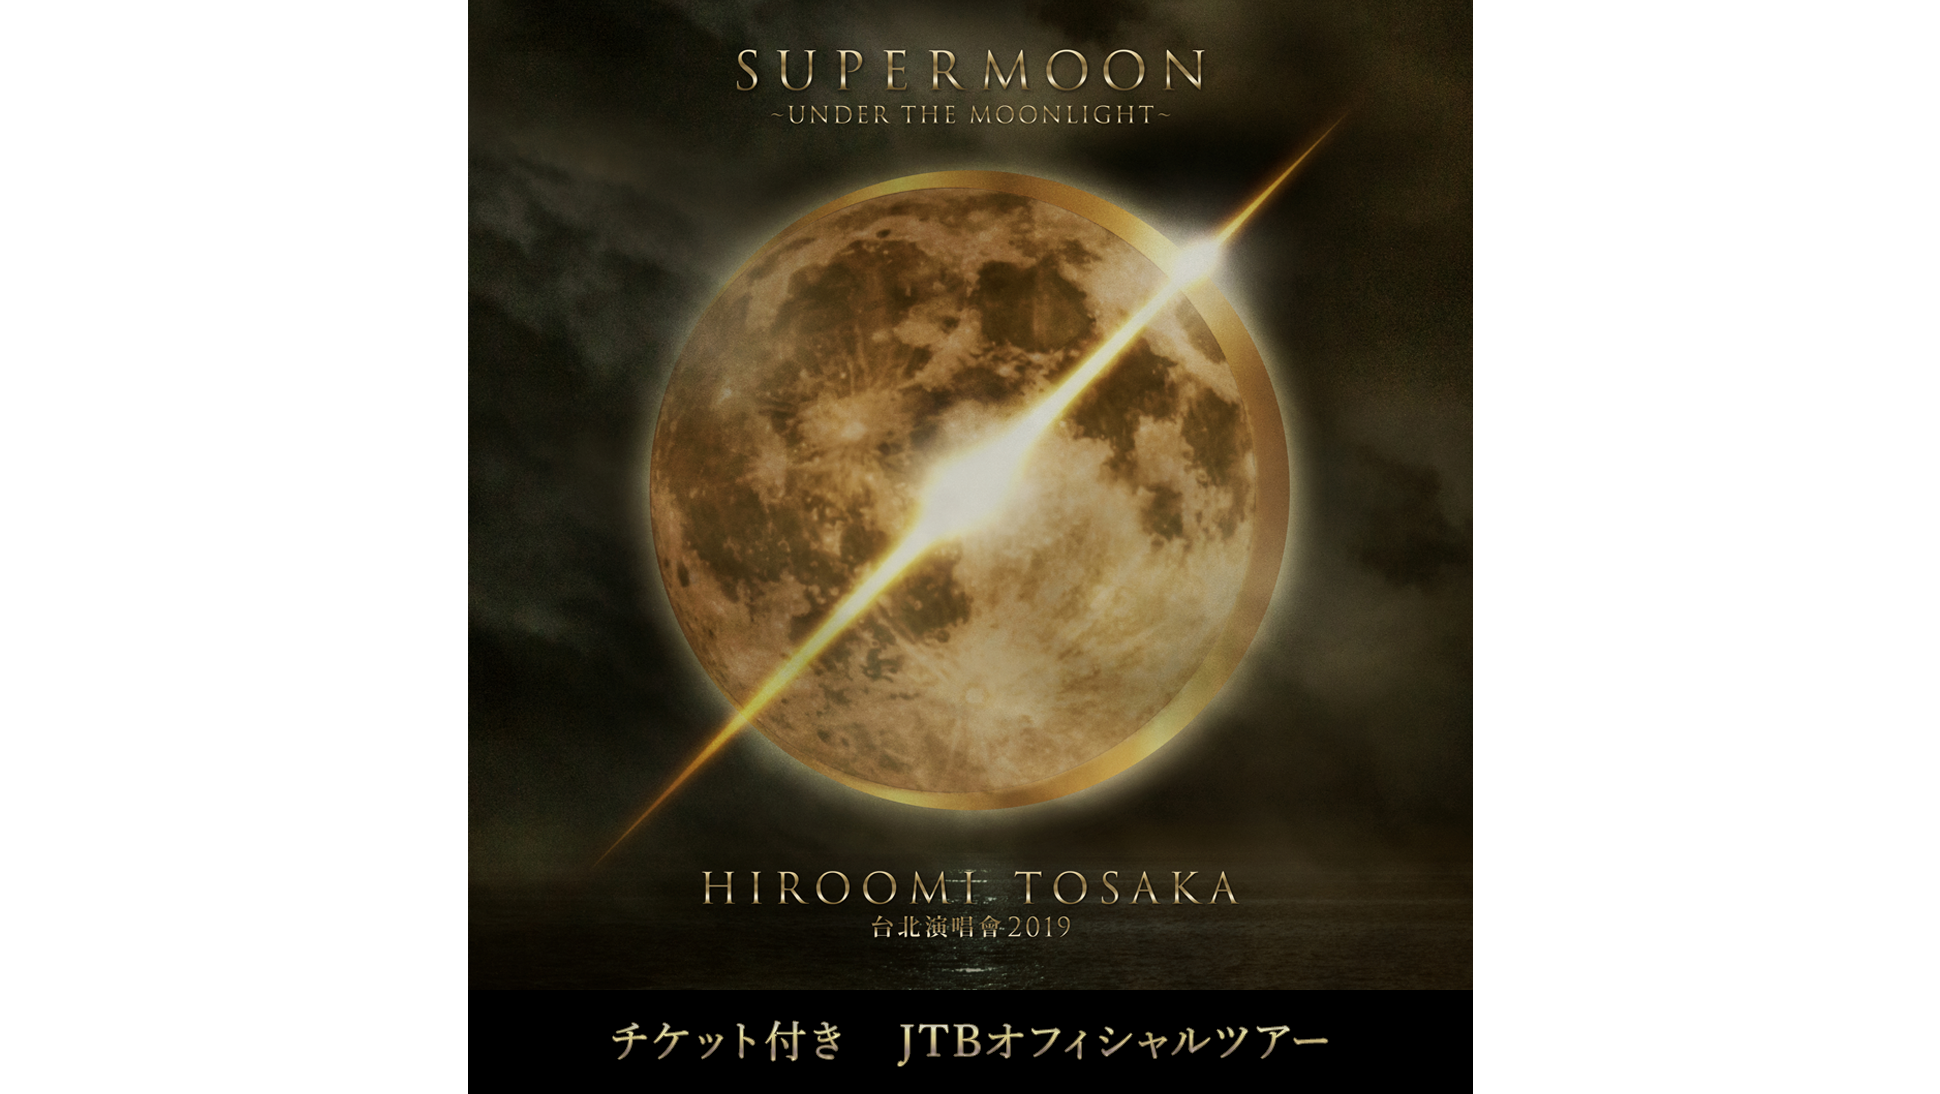 HIROOMI TOSAKA 台北演唱會 2019 SUPERMOON<br> ～UNDER THE MOONLIGHT～<br>チケット付 JTBオフィシャルツアー